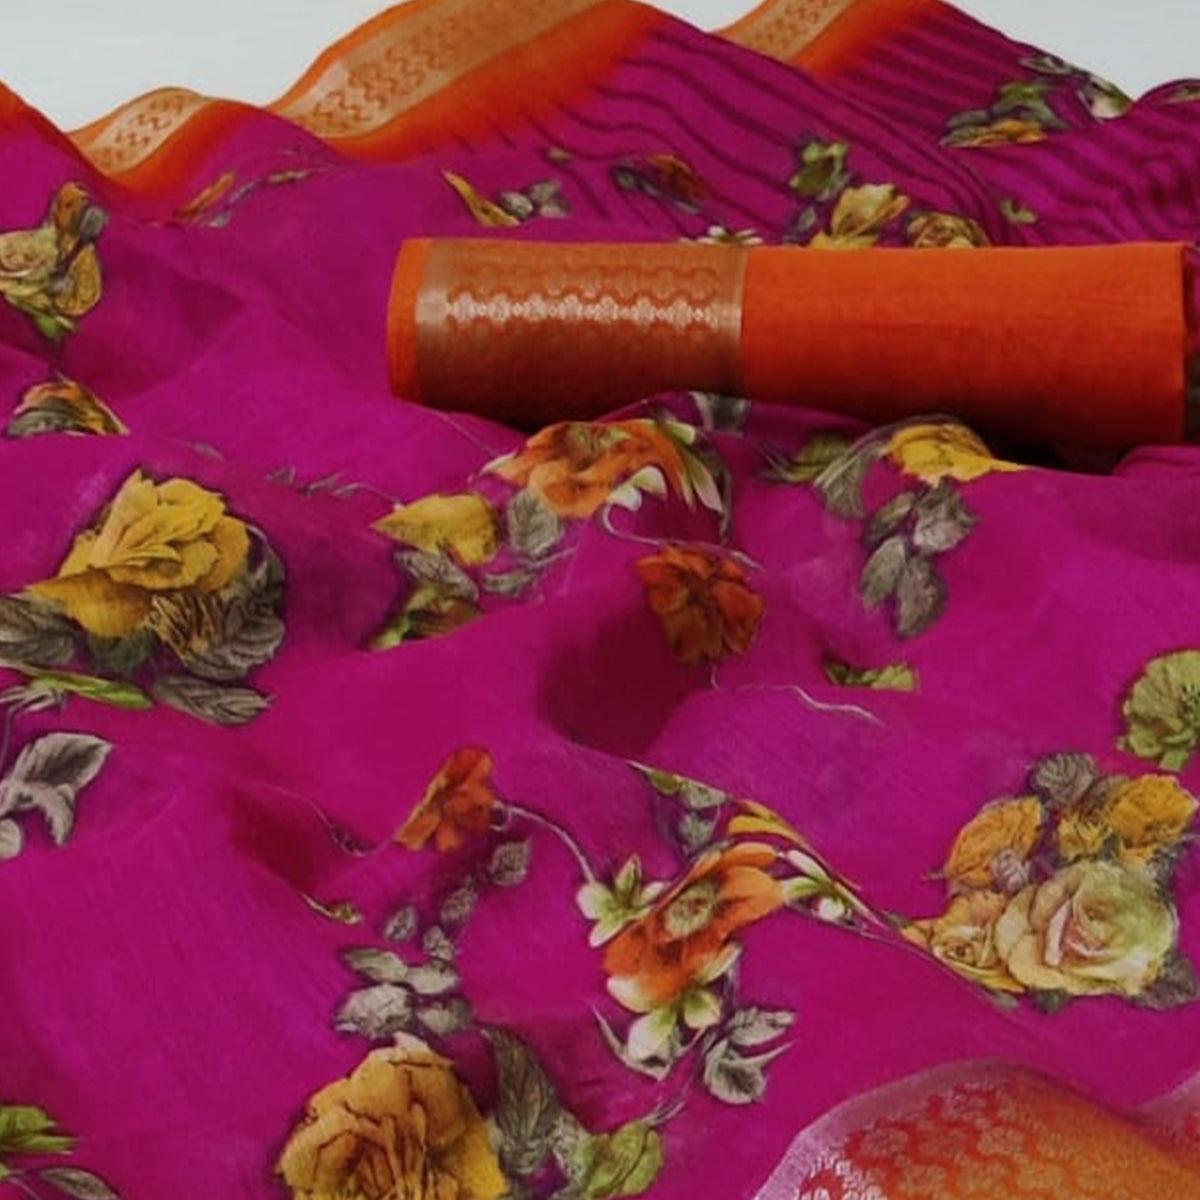 Pink Festive Wear Floral Printed Woven Border Cotton Saree - Peachmode